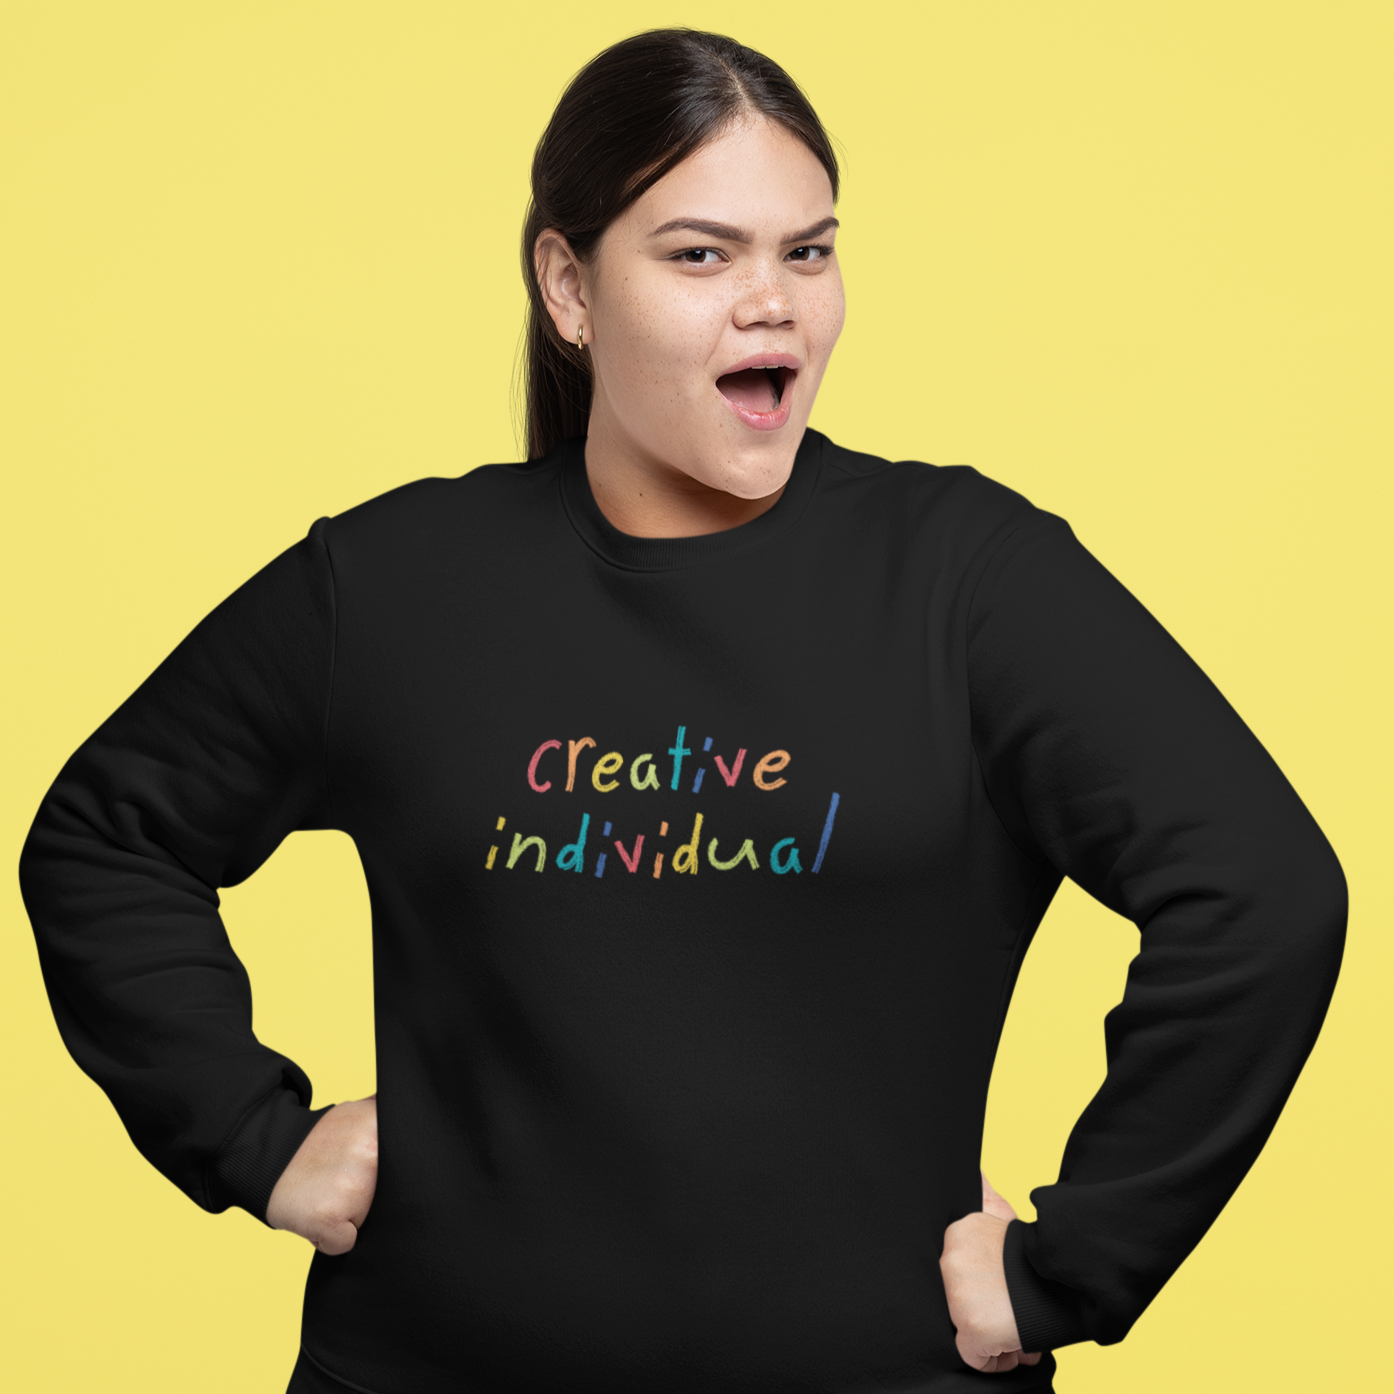 Creative Individual Sweatshirt